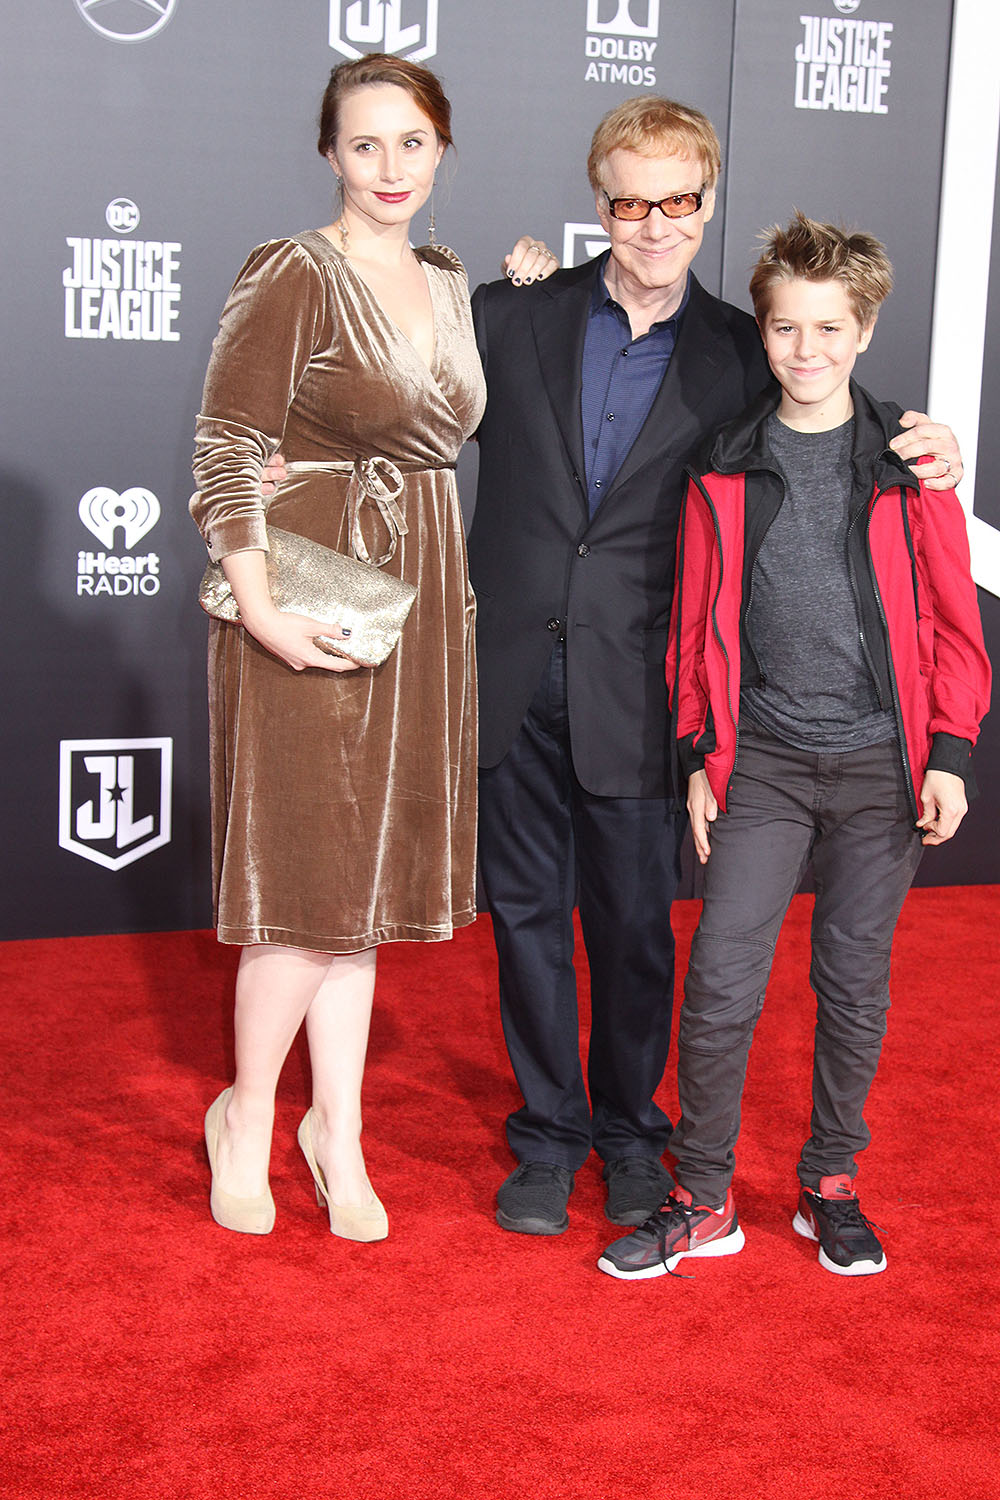 Bridget Fonda's incredibly private life with husband Danny Elfman